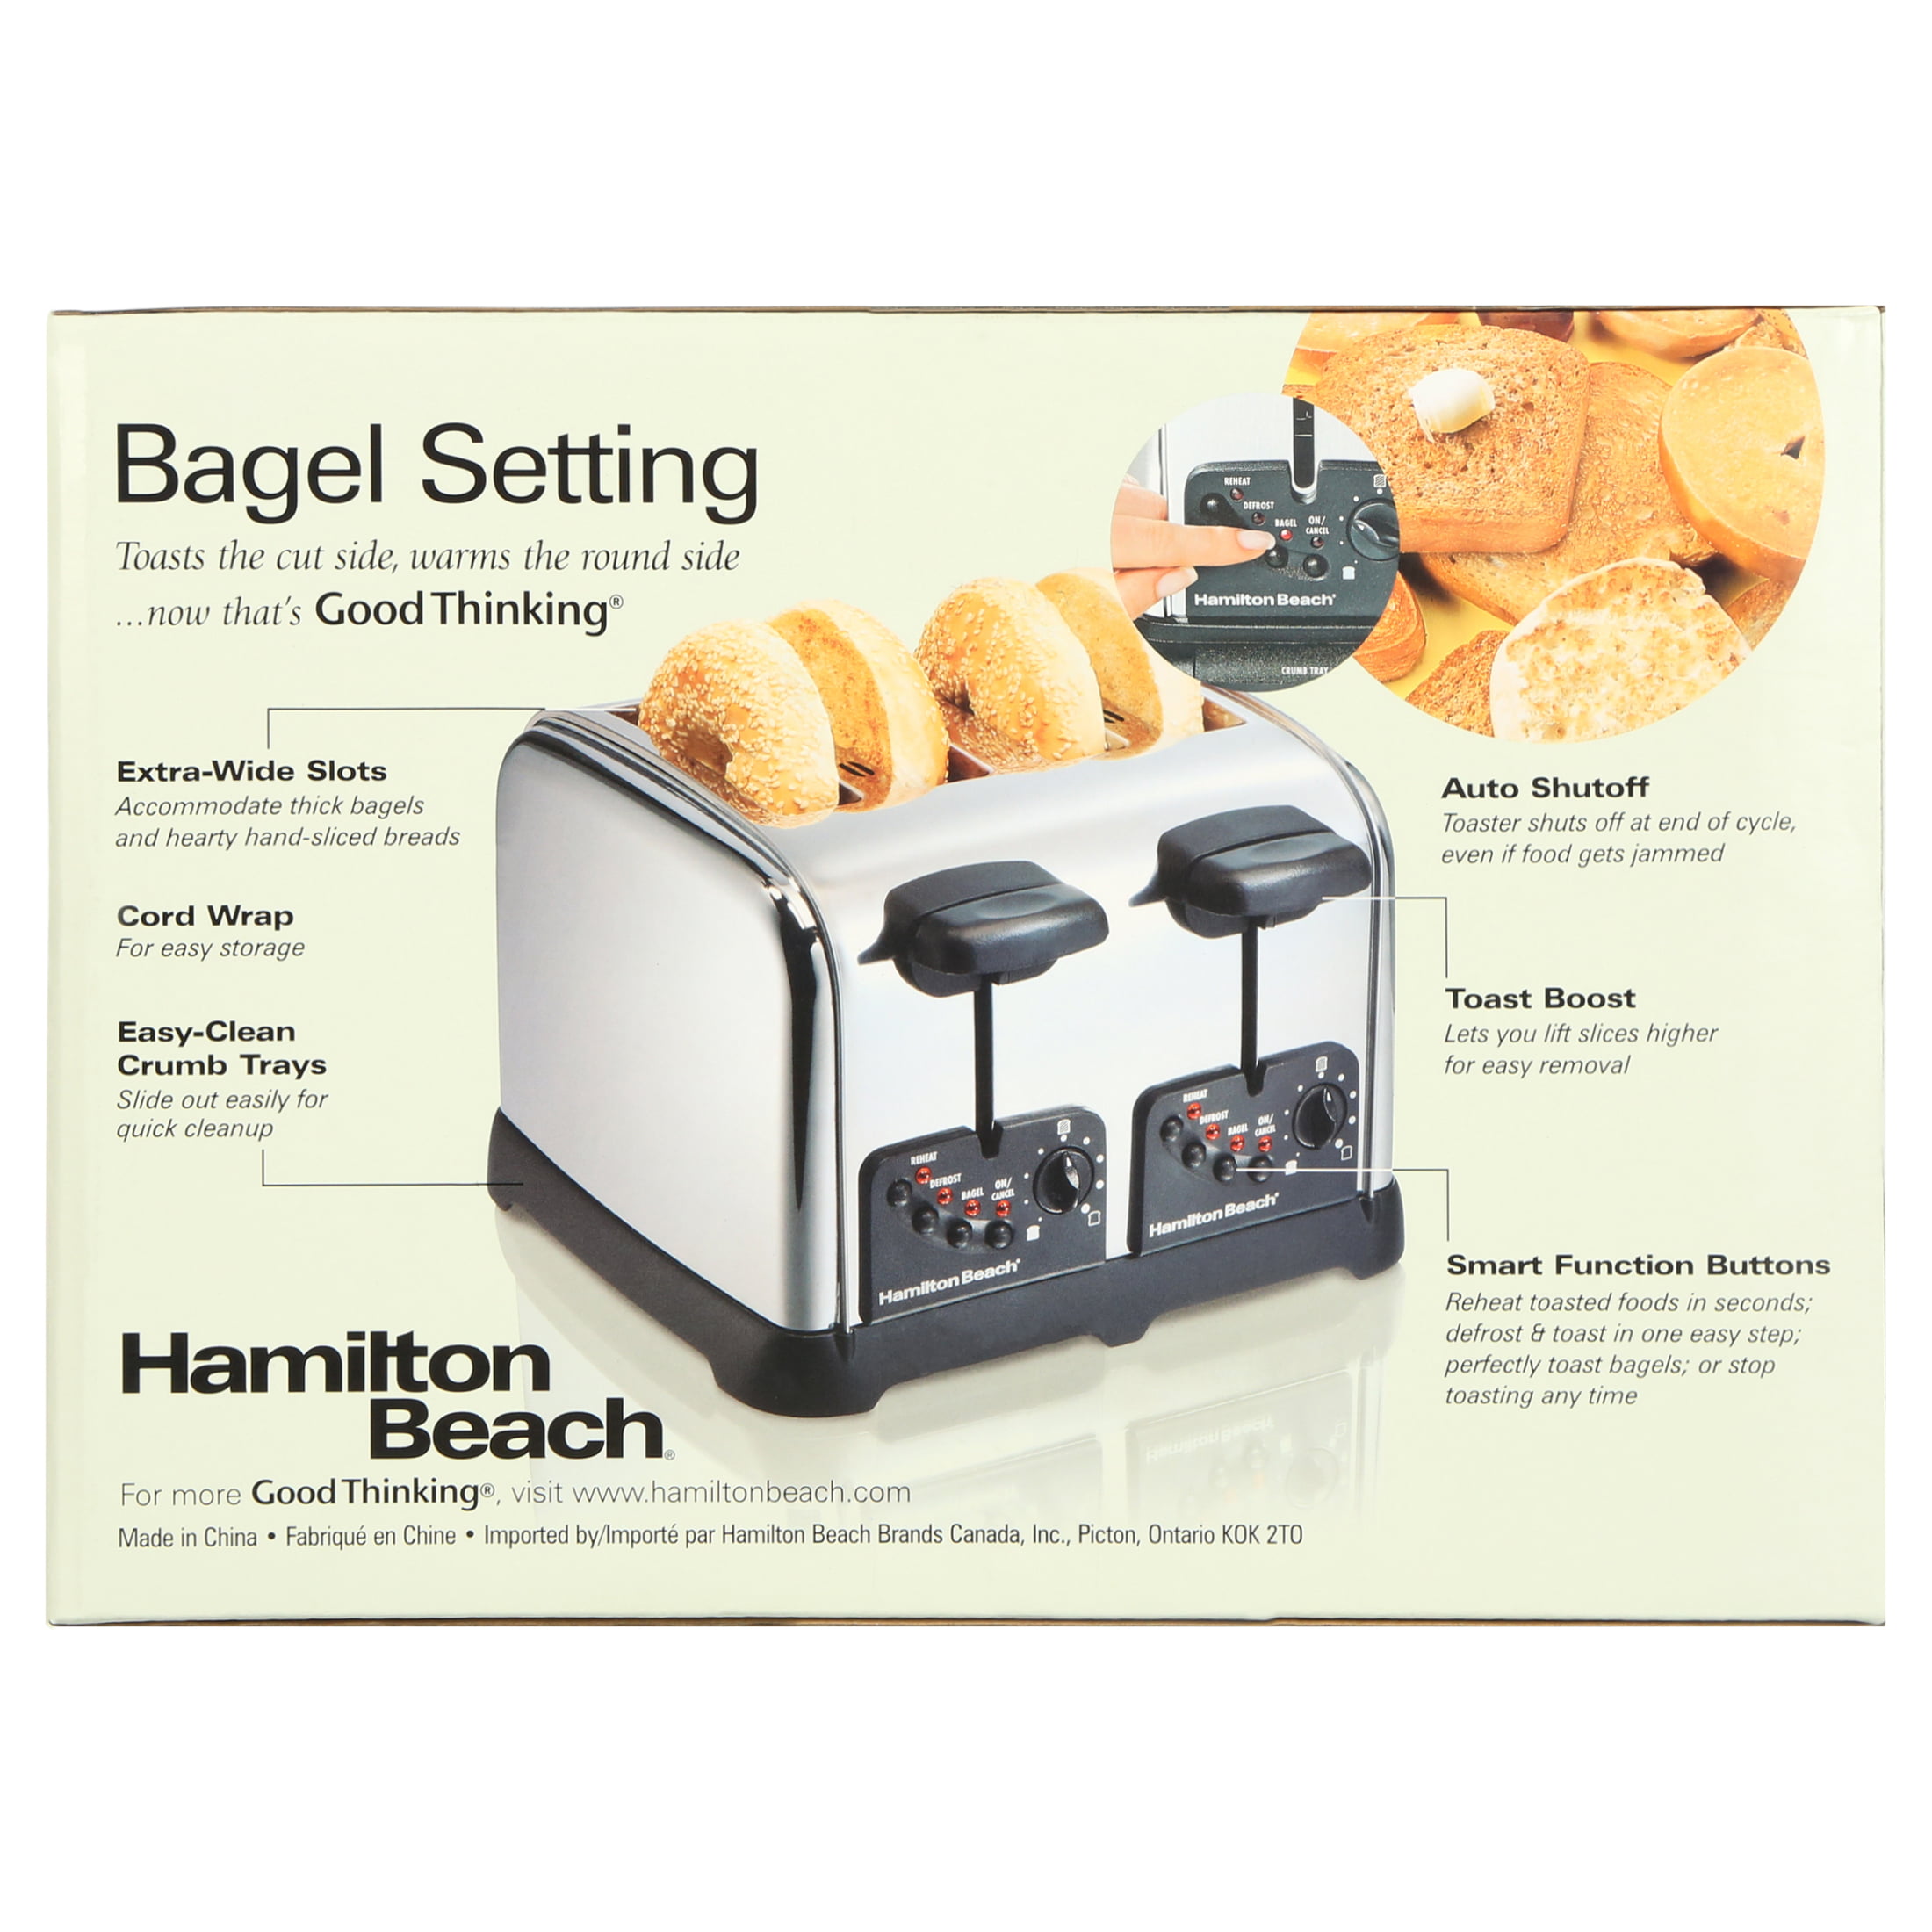 Hamilton Beach Classic Chrome 2-Slice Toaster review: Yep, it's a toaster -  CNET